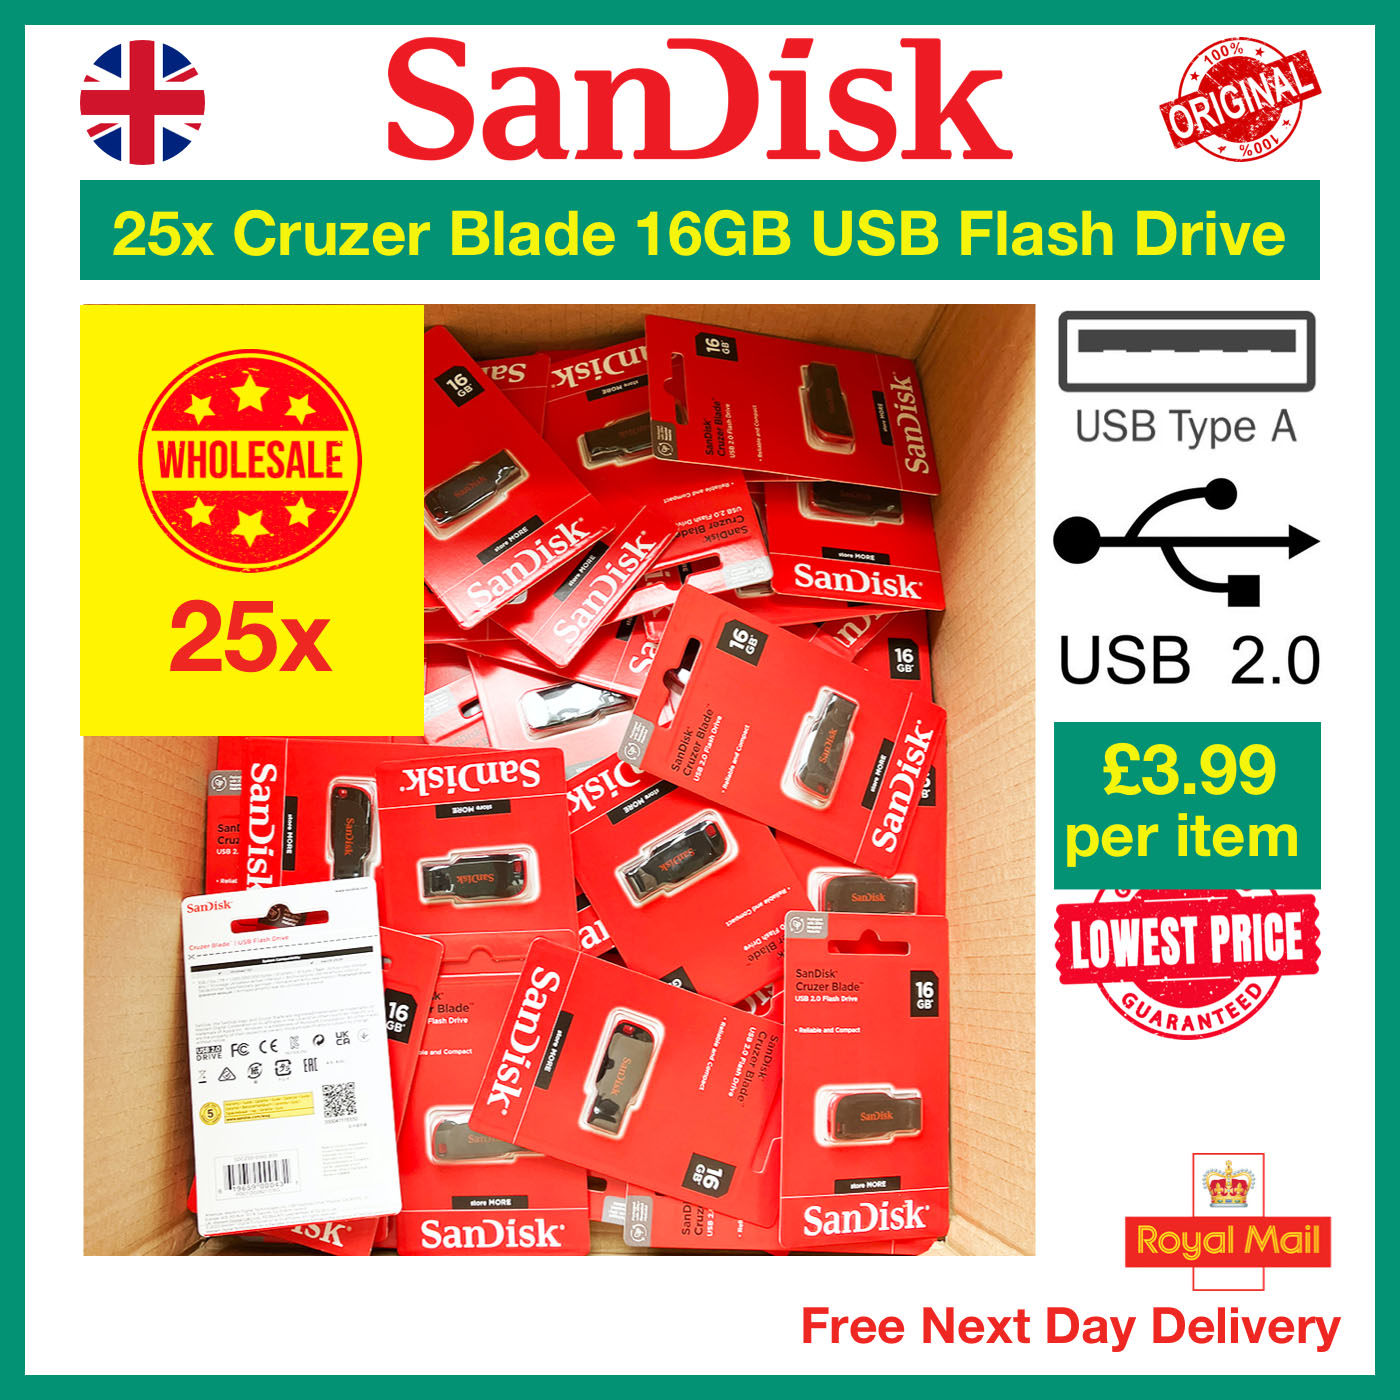 25x SanDisk Cruzer Blade 16GB USB Flash Drive Wholesale Lowest Price Bulk Price Lot